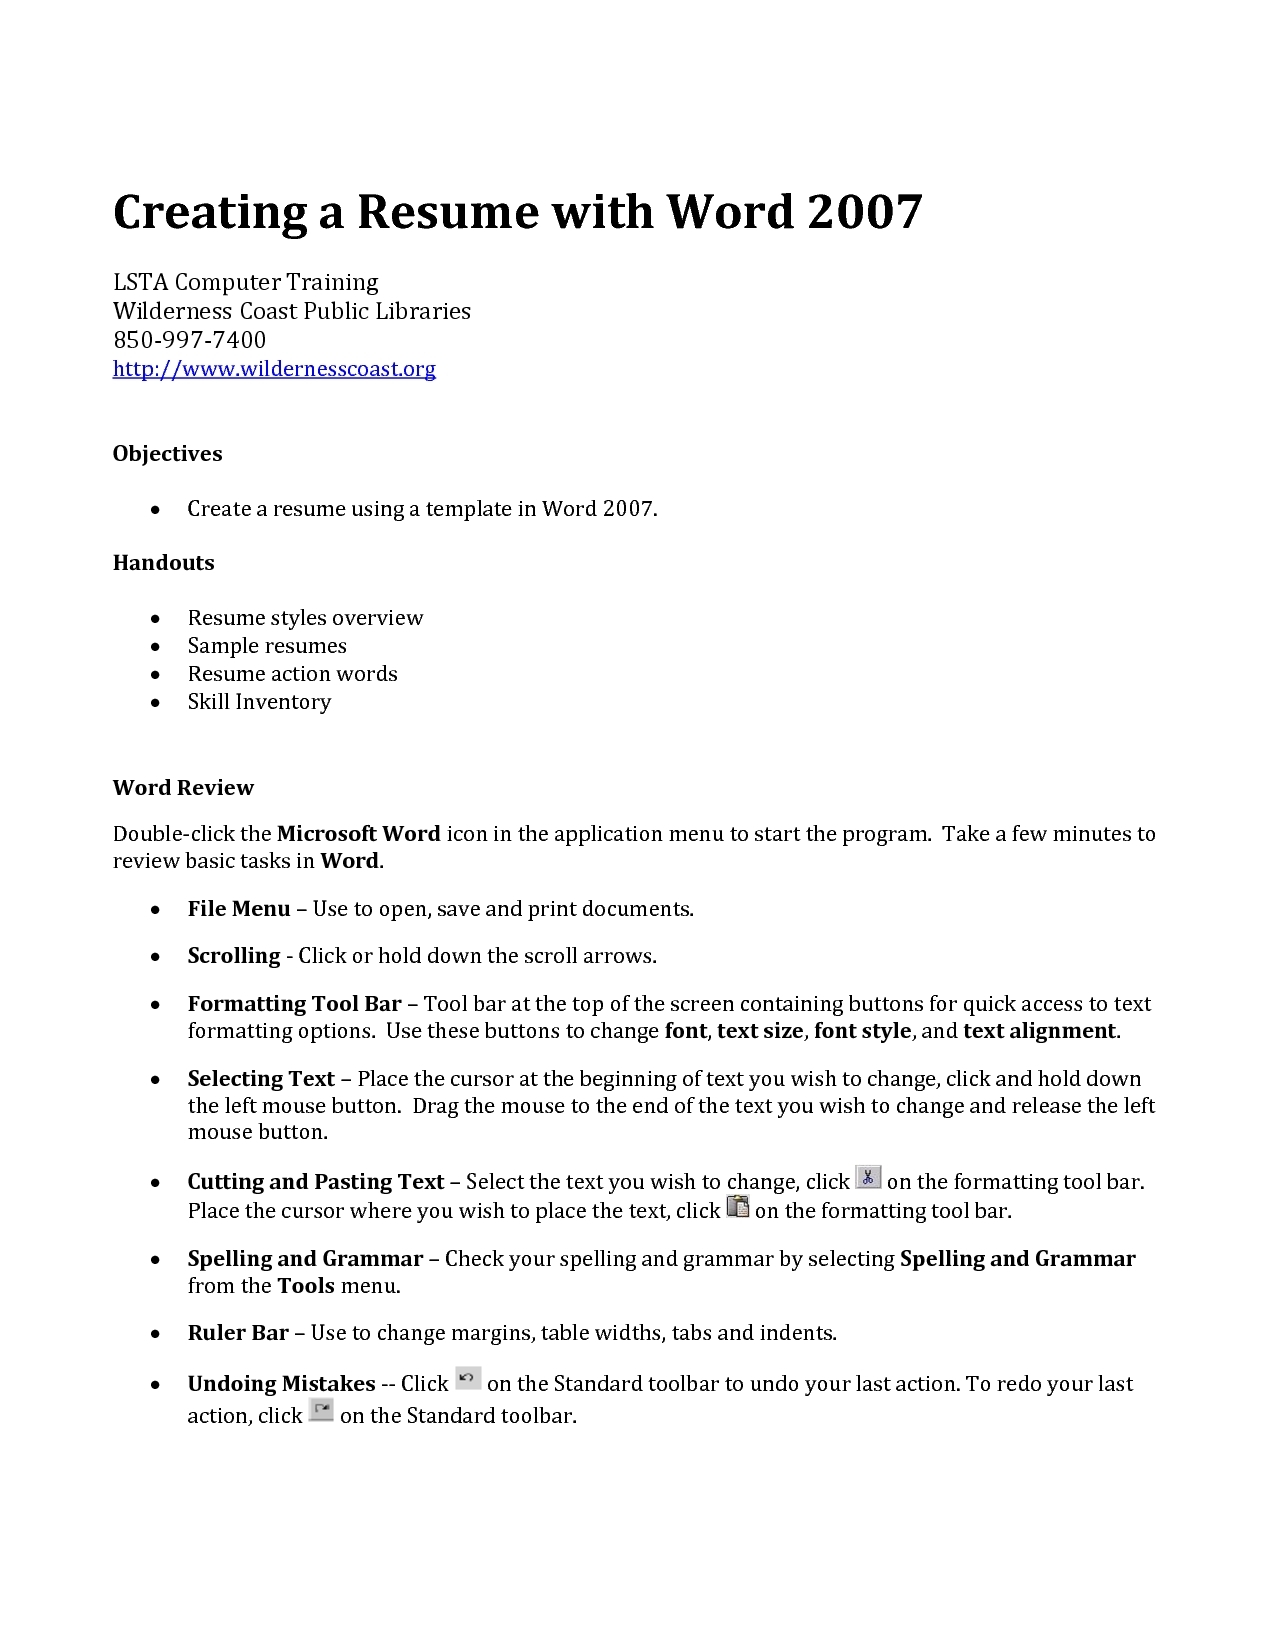 Custom resume writing youtube